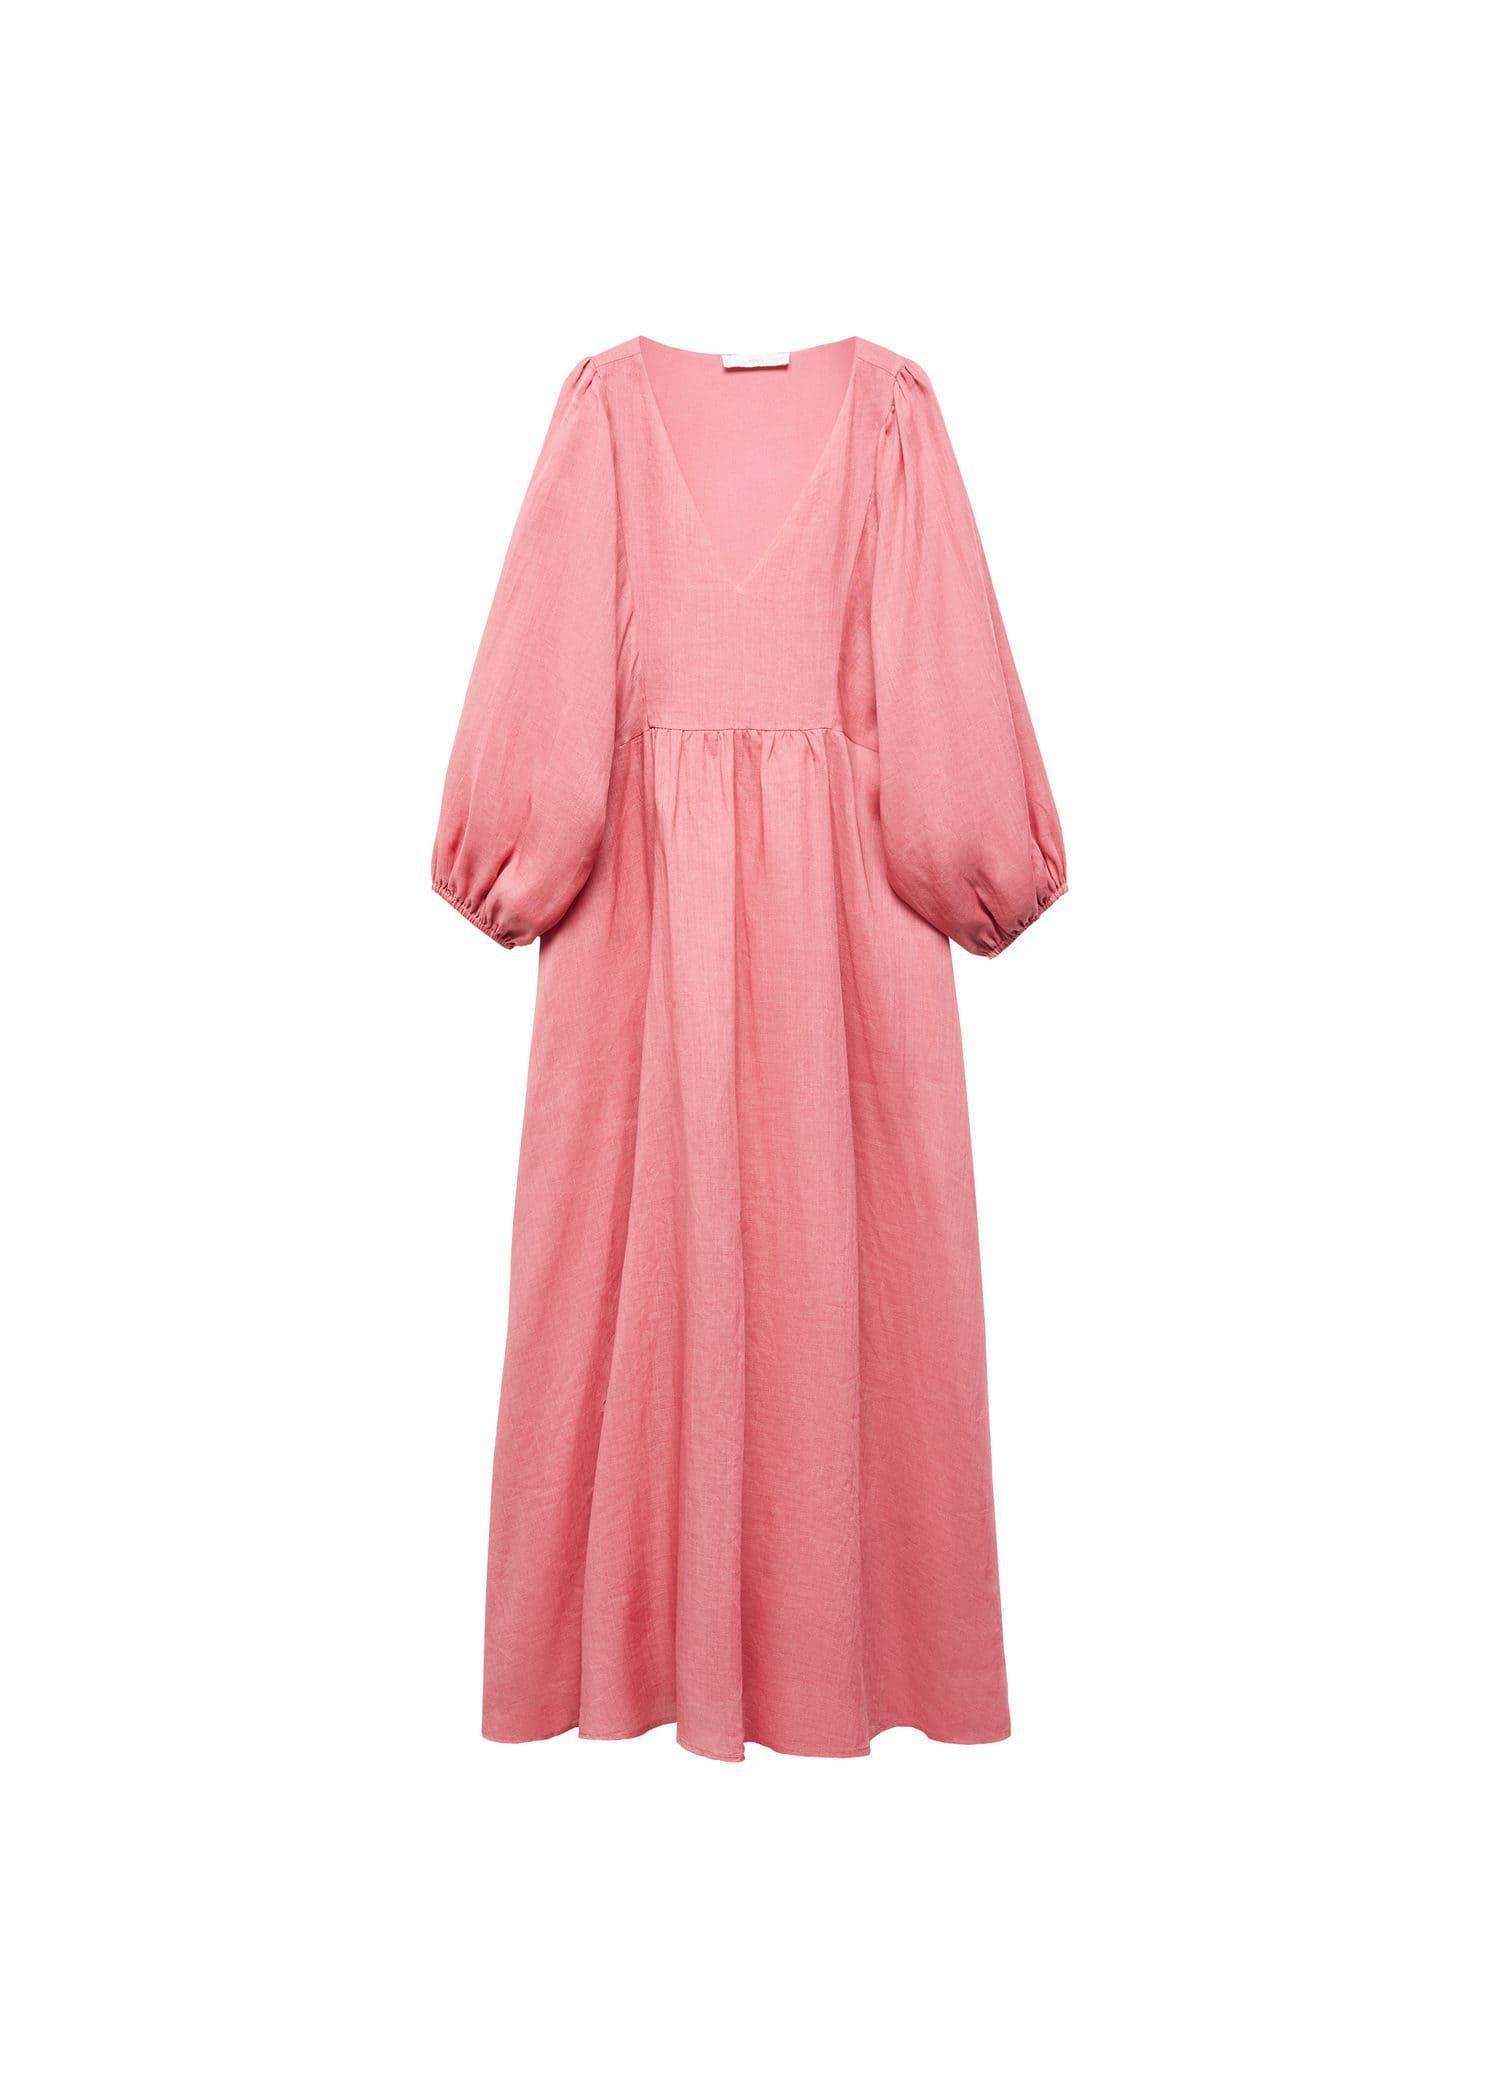 Mango - Pink Ramie Puff Sleeve Dress